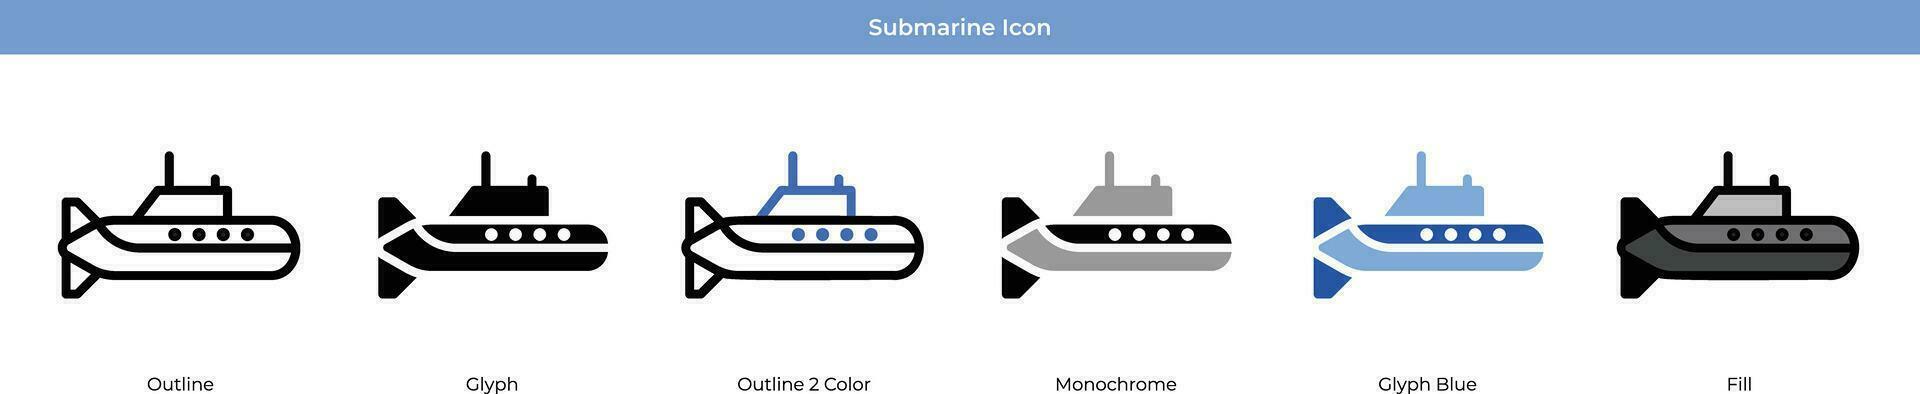 Submarine Icon Set Vector